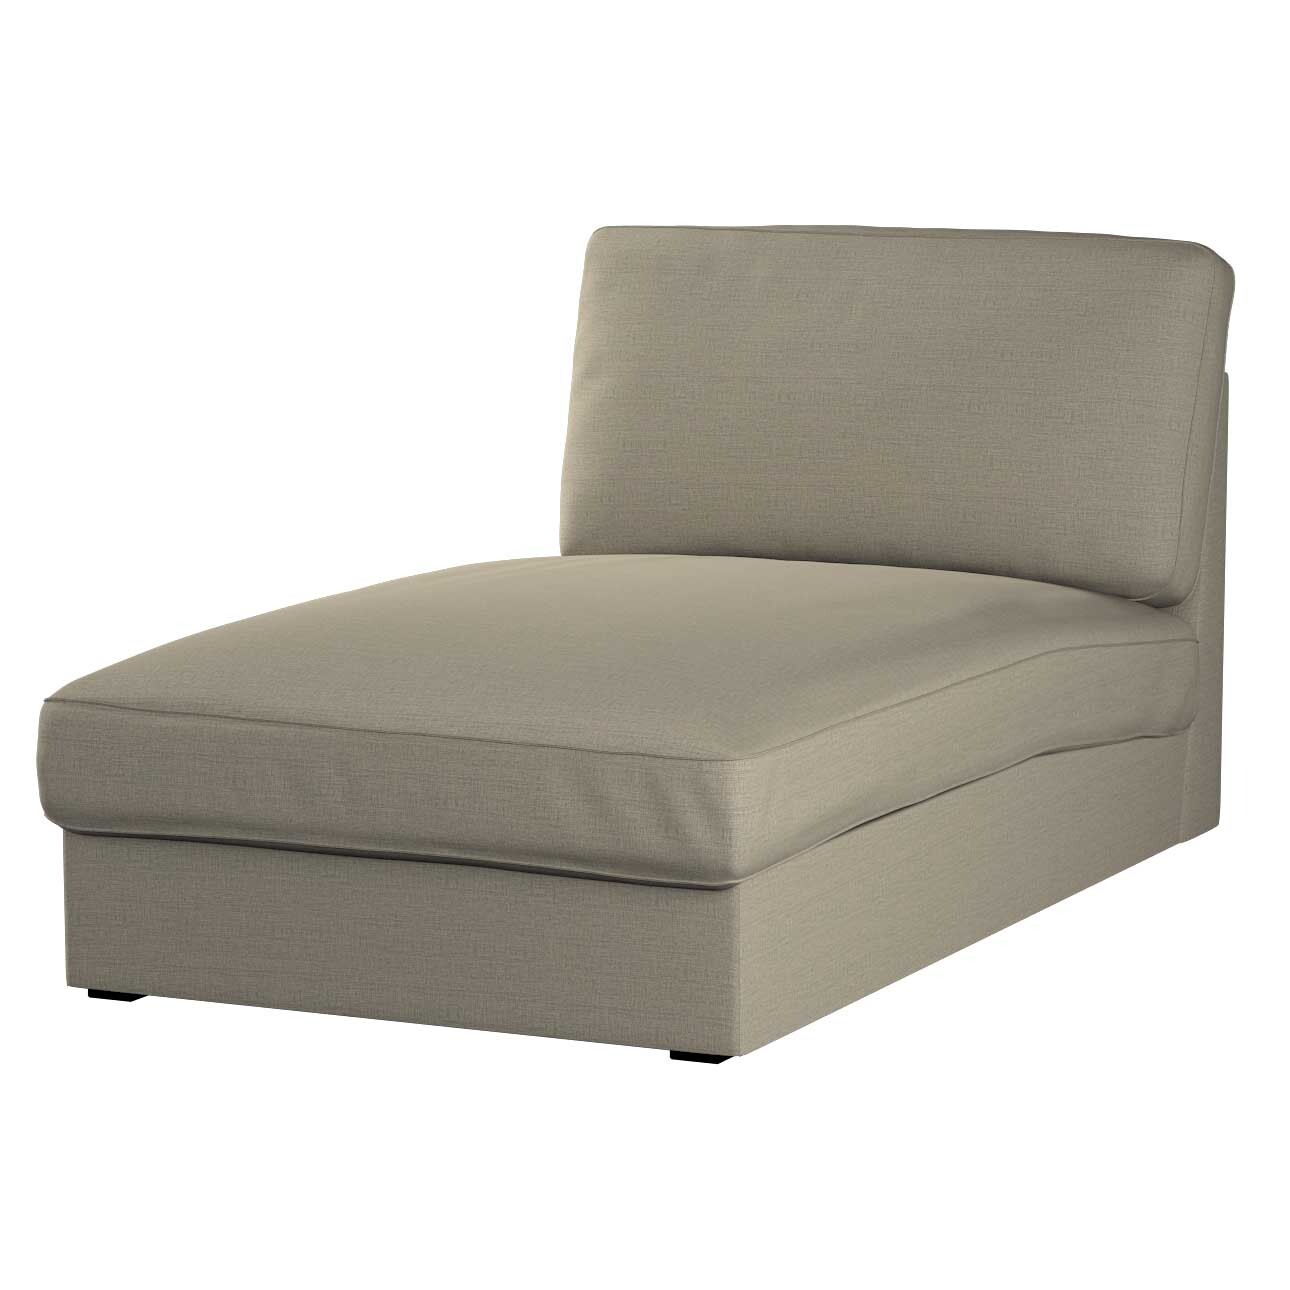 Bezug für Kivik Recamiere Sofa, beige-grau, Bezug für Kivik Recamiere, Livi günstig online kaufen